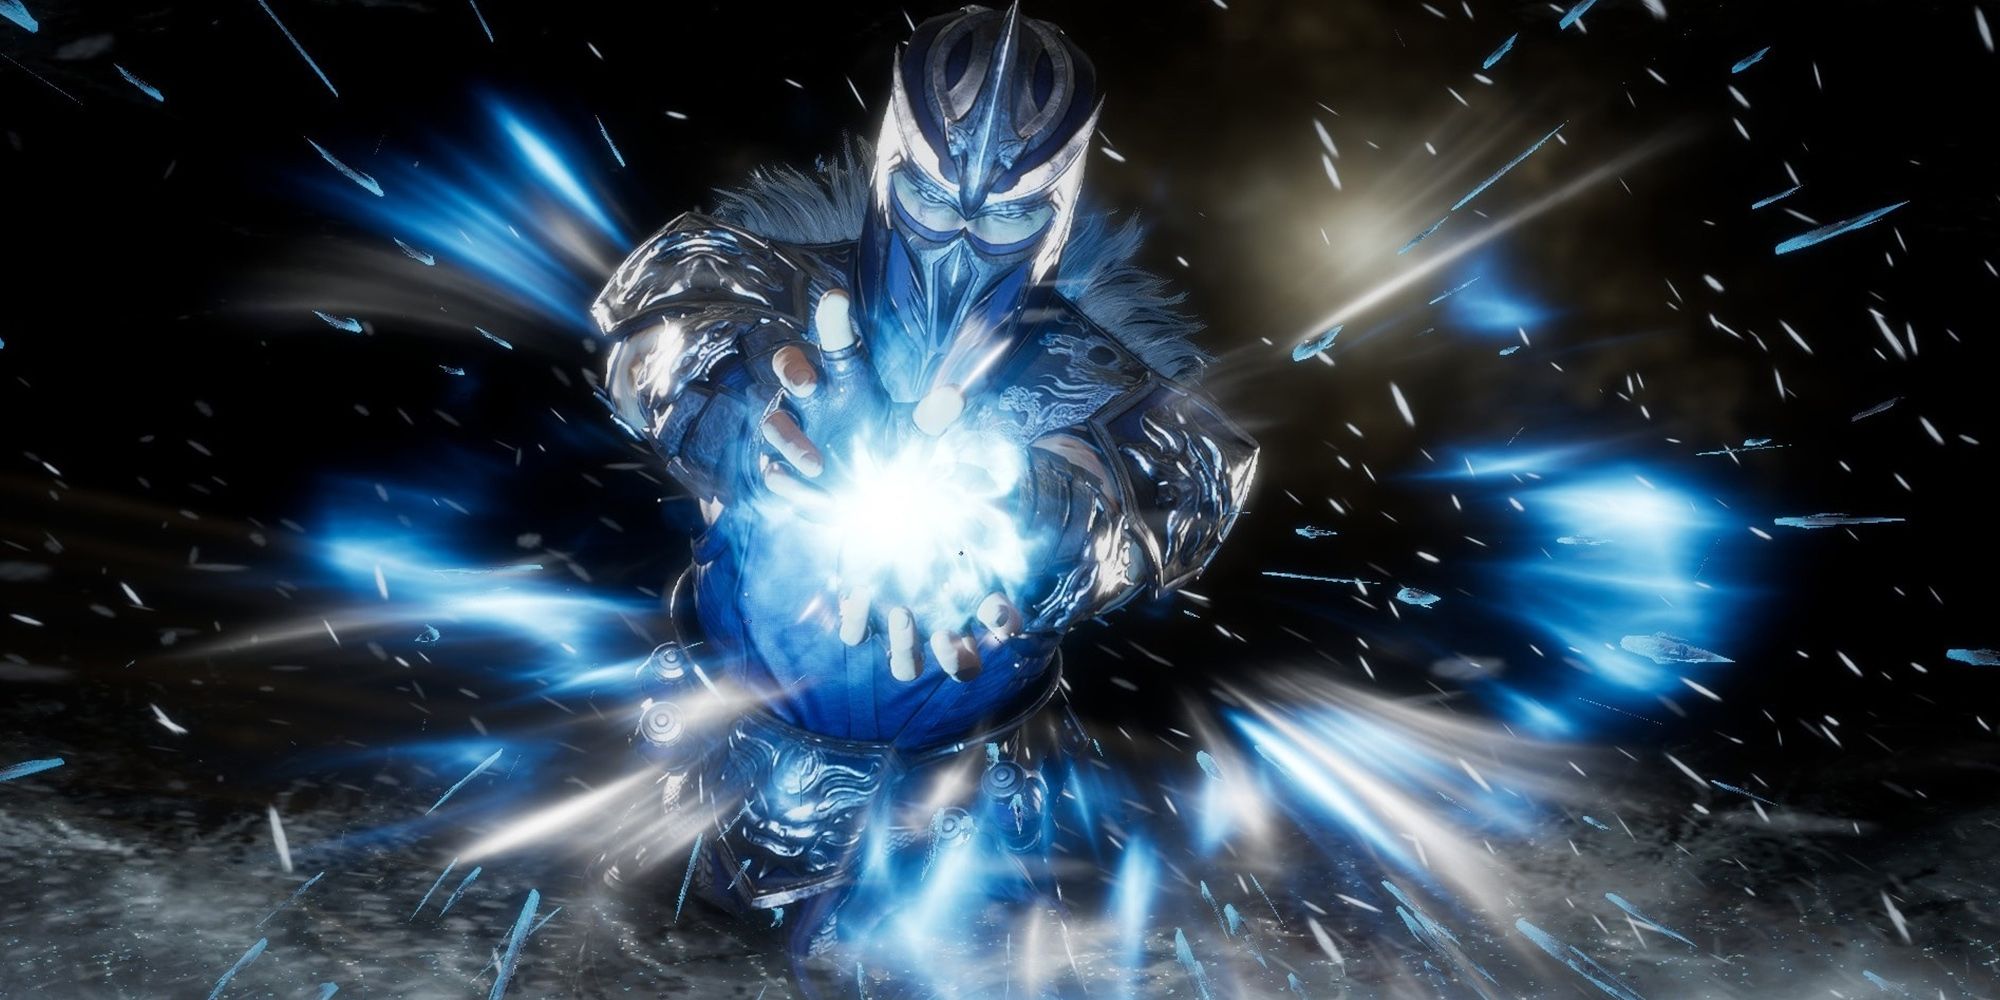 Mortal Kombat - Sub Zero Using An Ice Attack Right At The Camera